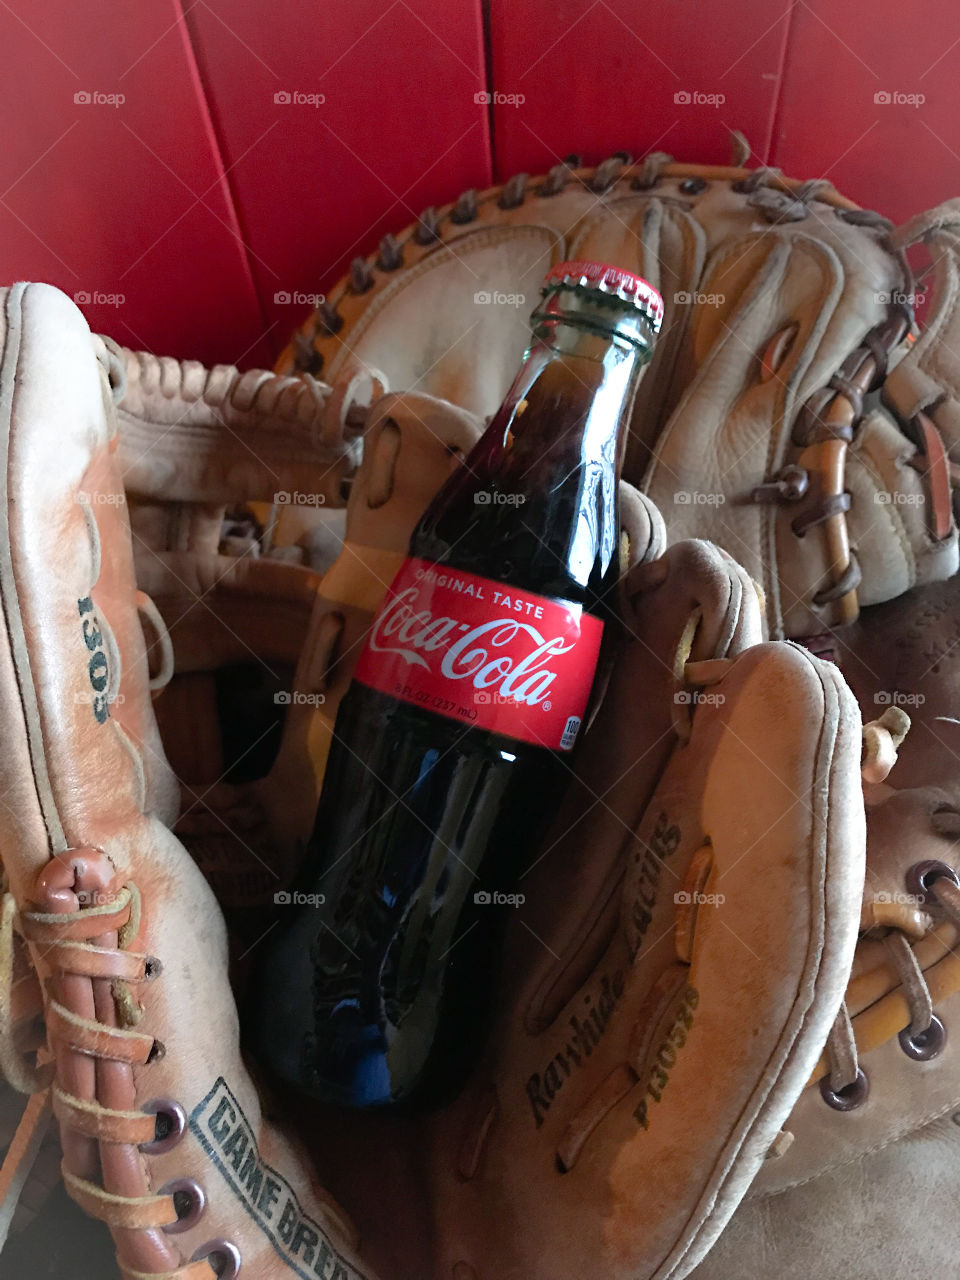 Coke bottle in a baseball glove. Red wooden background. 